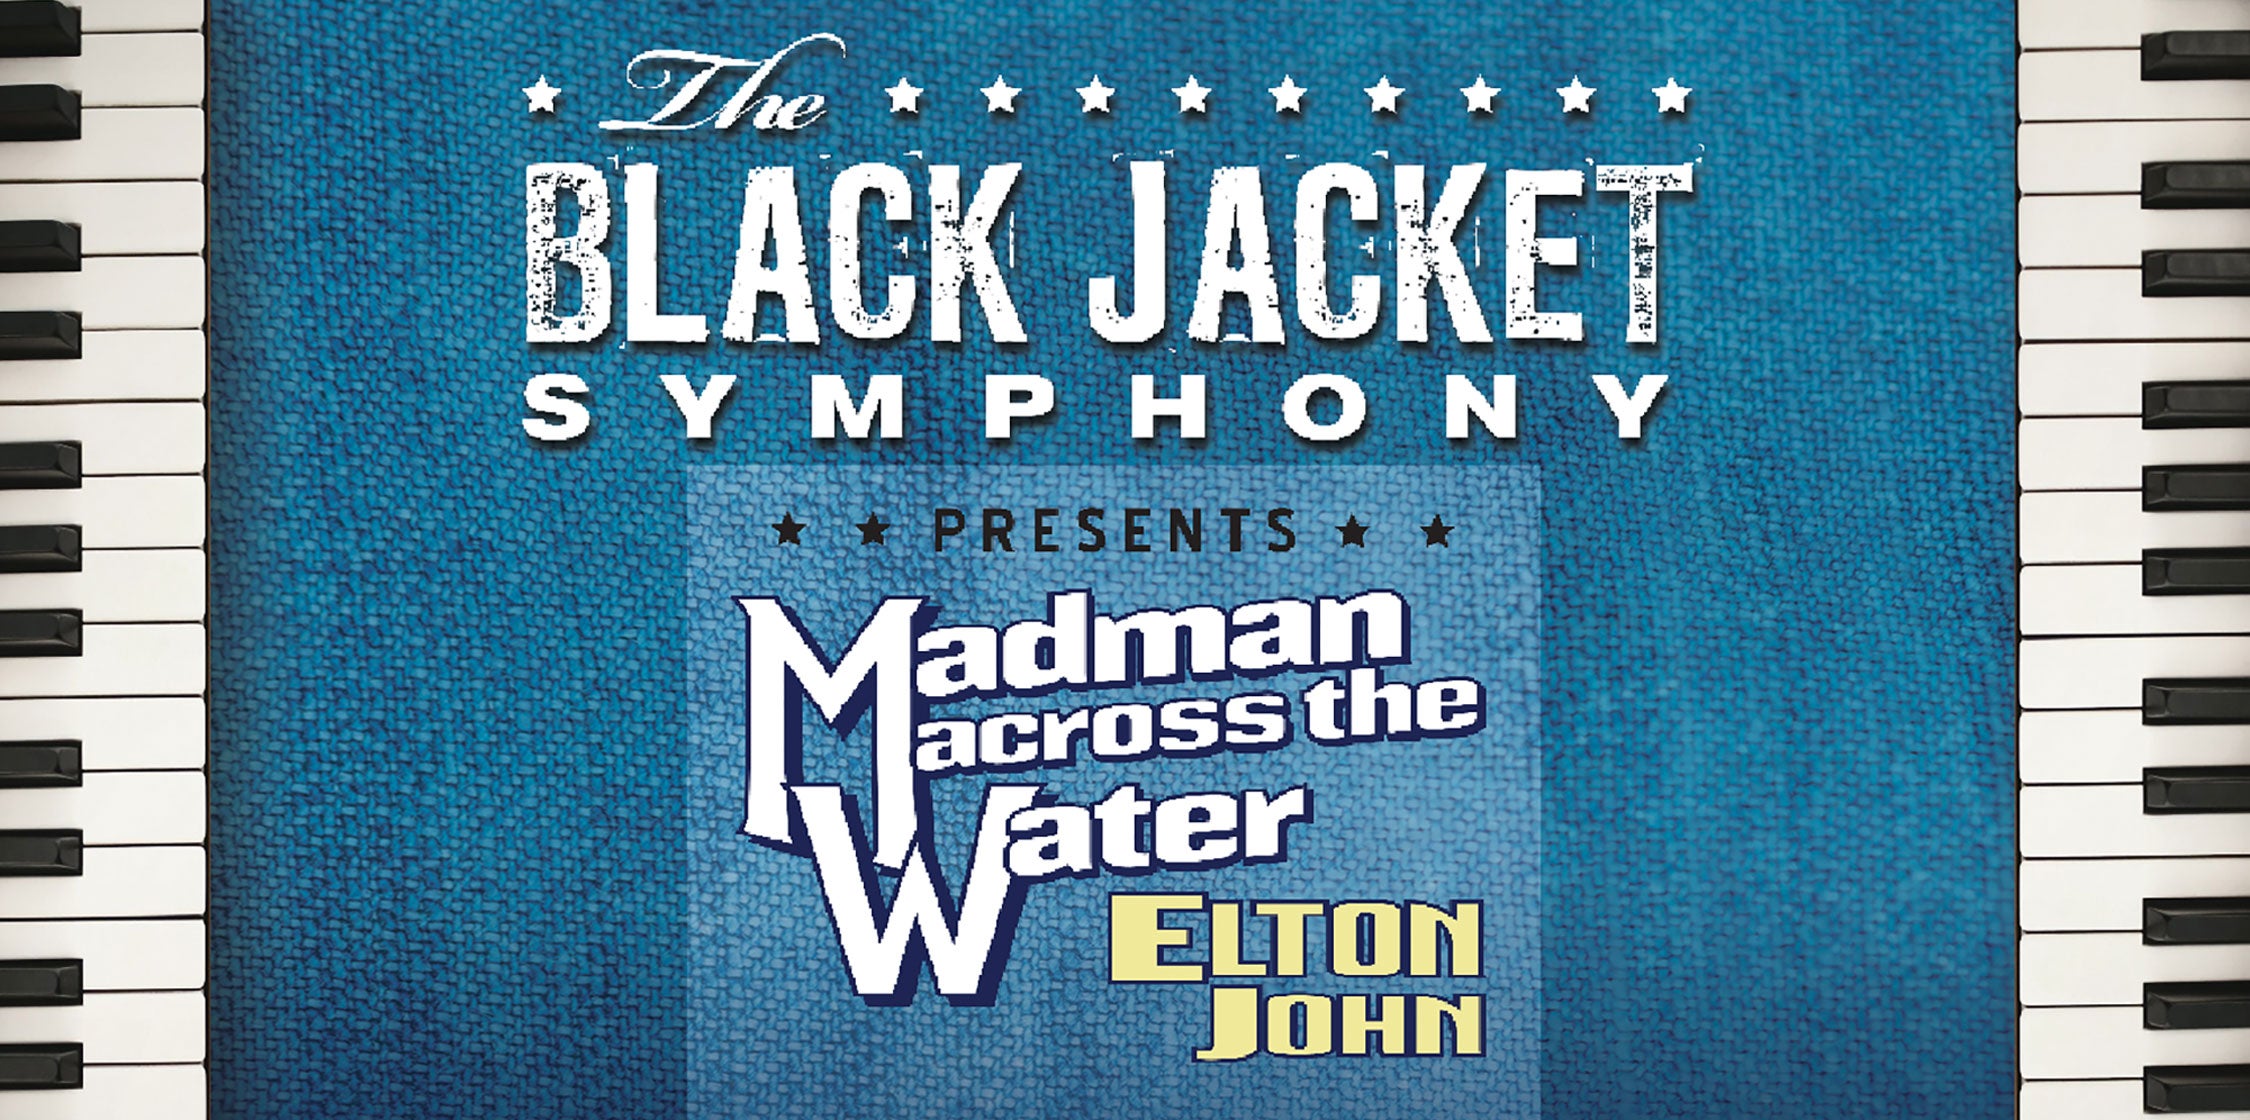  The Black Jacket Symphony Elton John’s "Madman Across The Water"